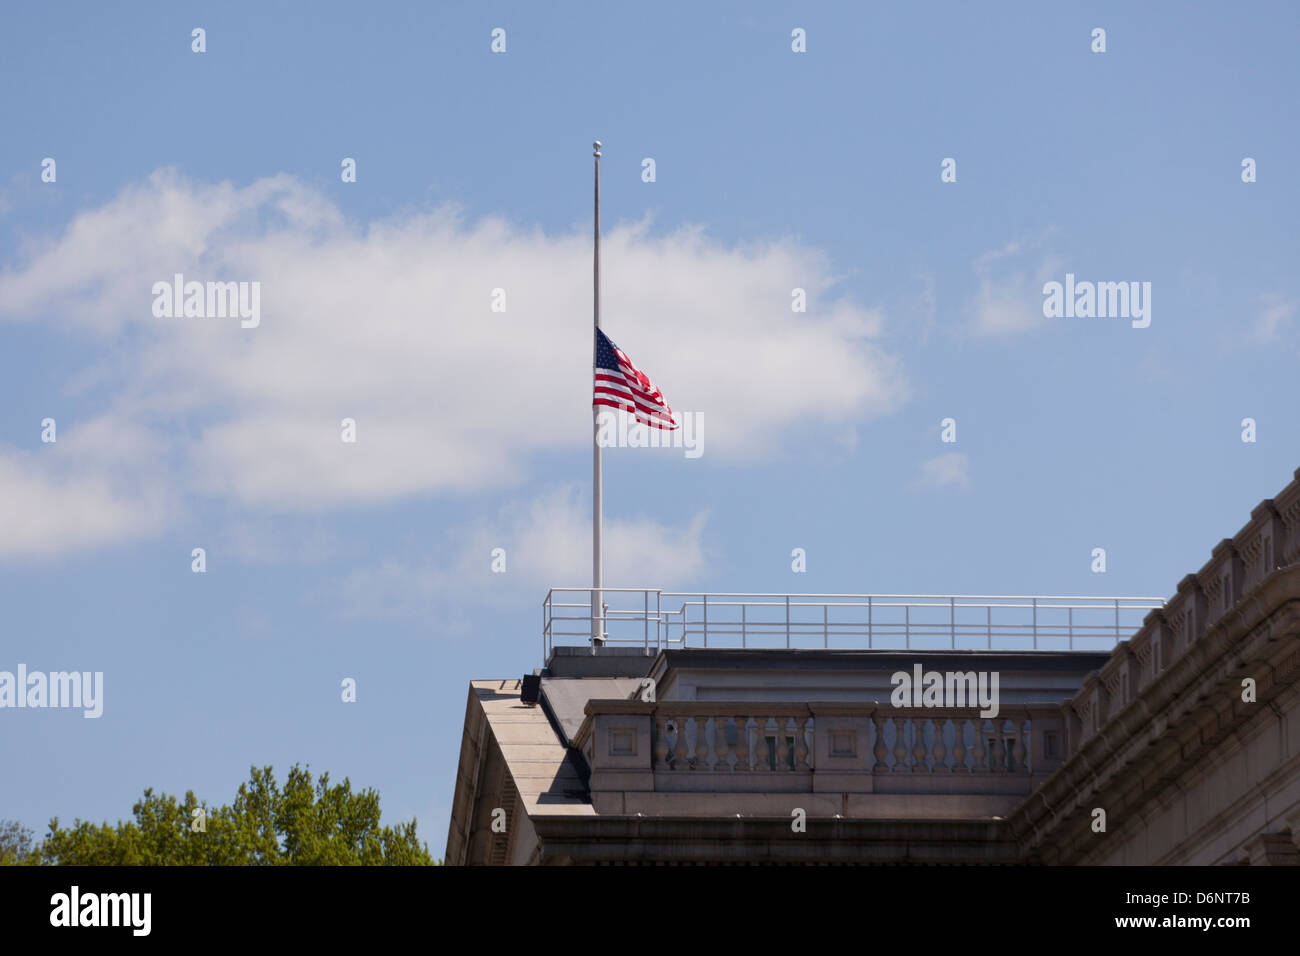 American flag at half staff Stock Photo